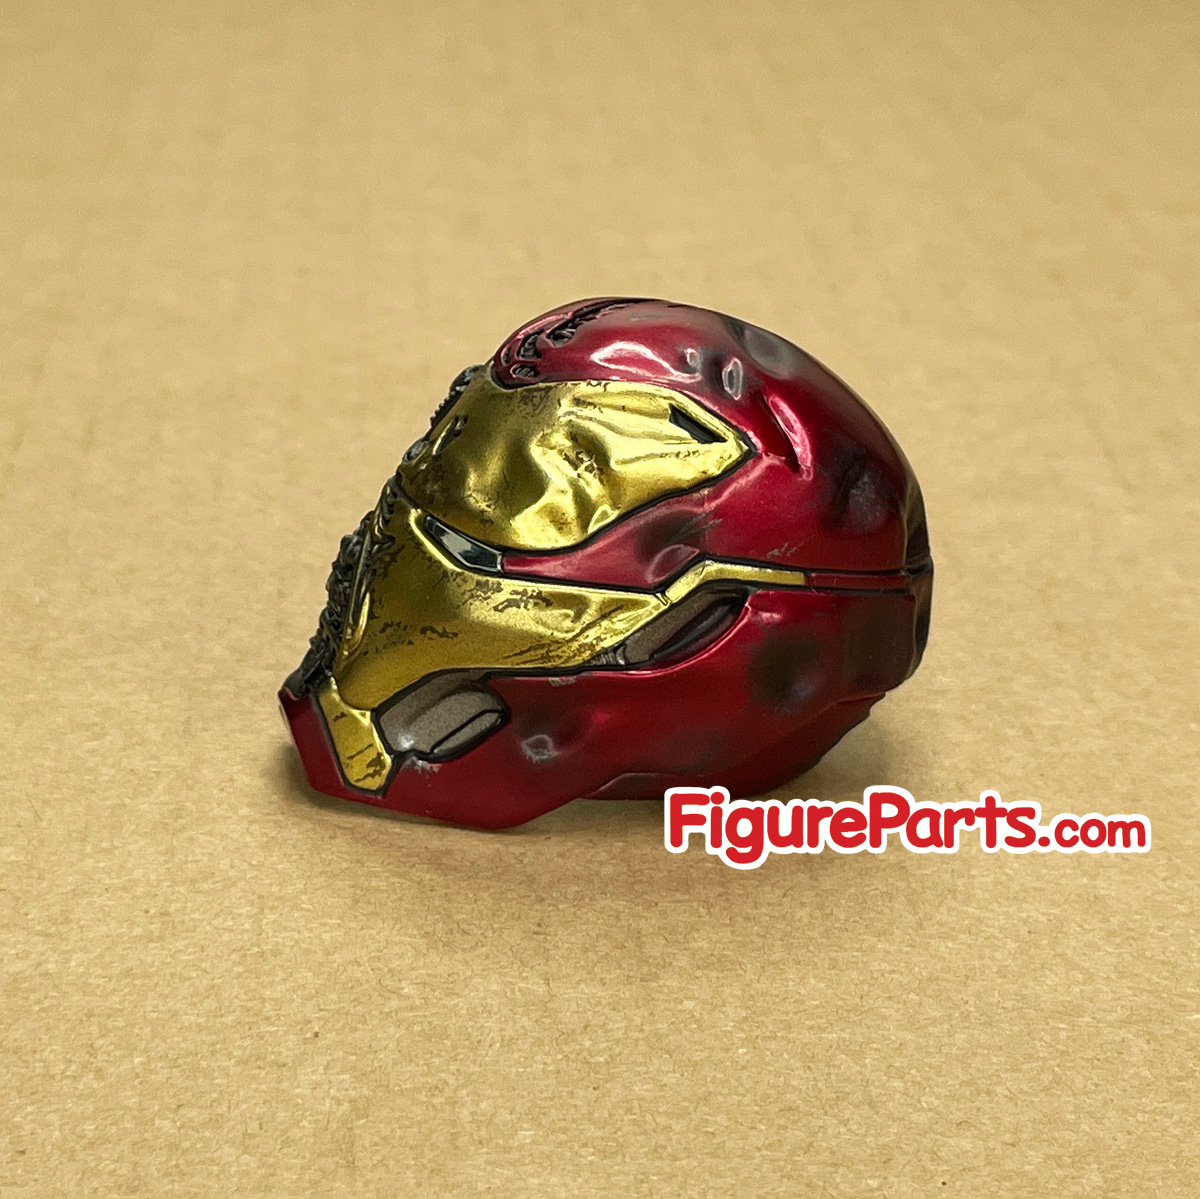 Damaged Iron Man Mark L Head  - Tony Stark Team Suit - Avengers Endgame - Hot Toys mms537 4